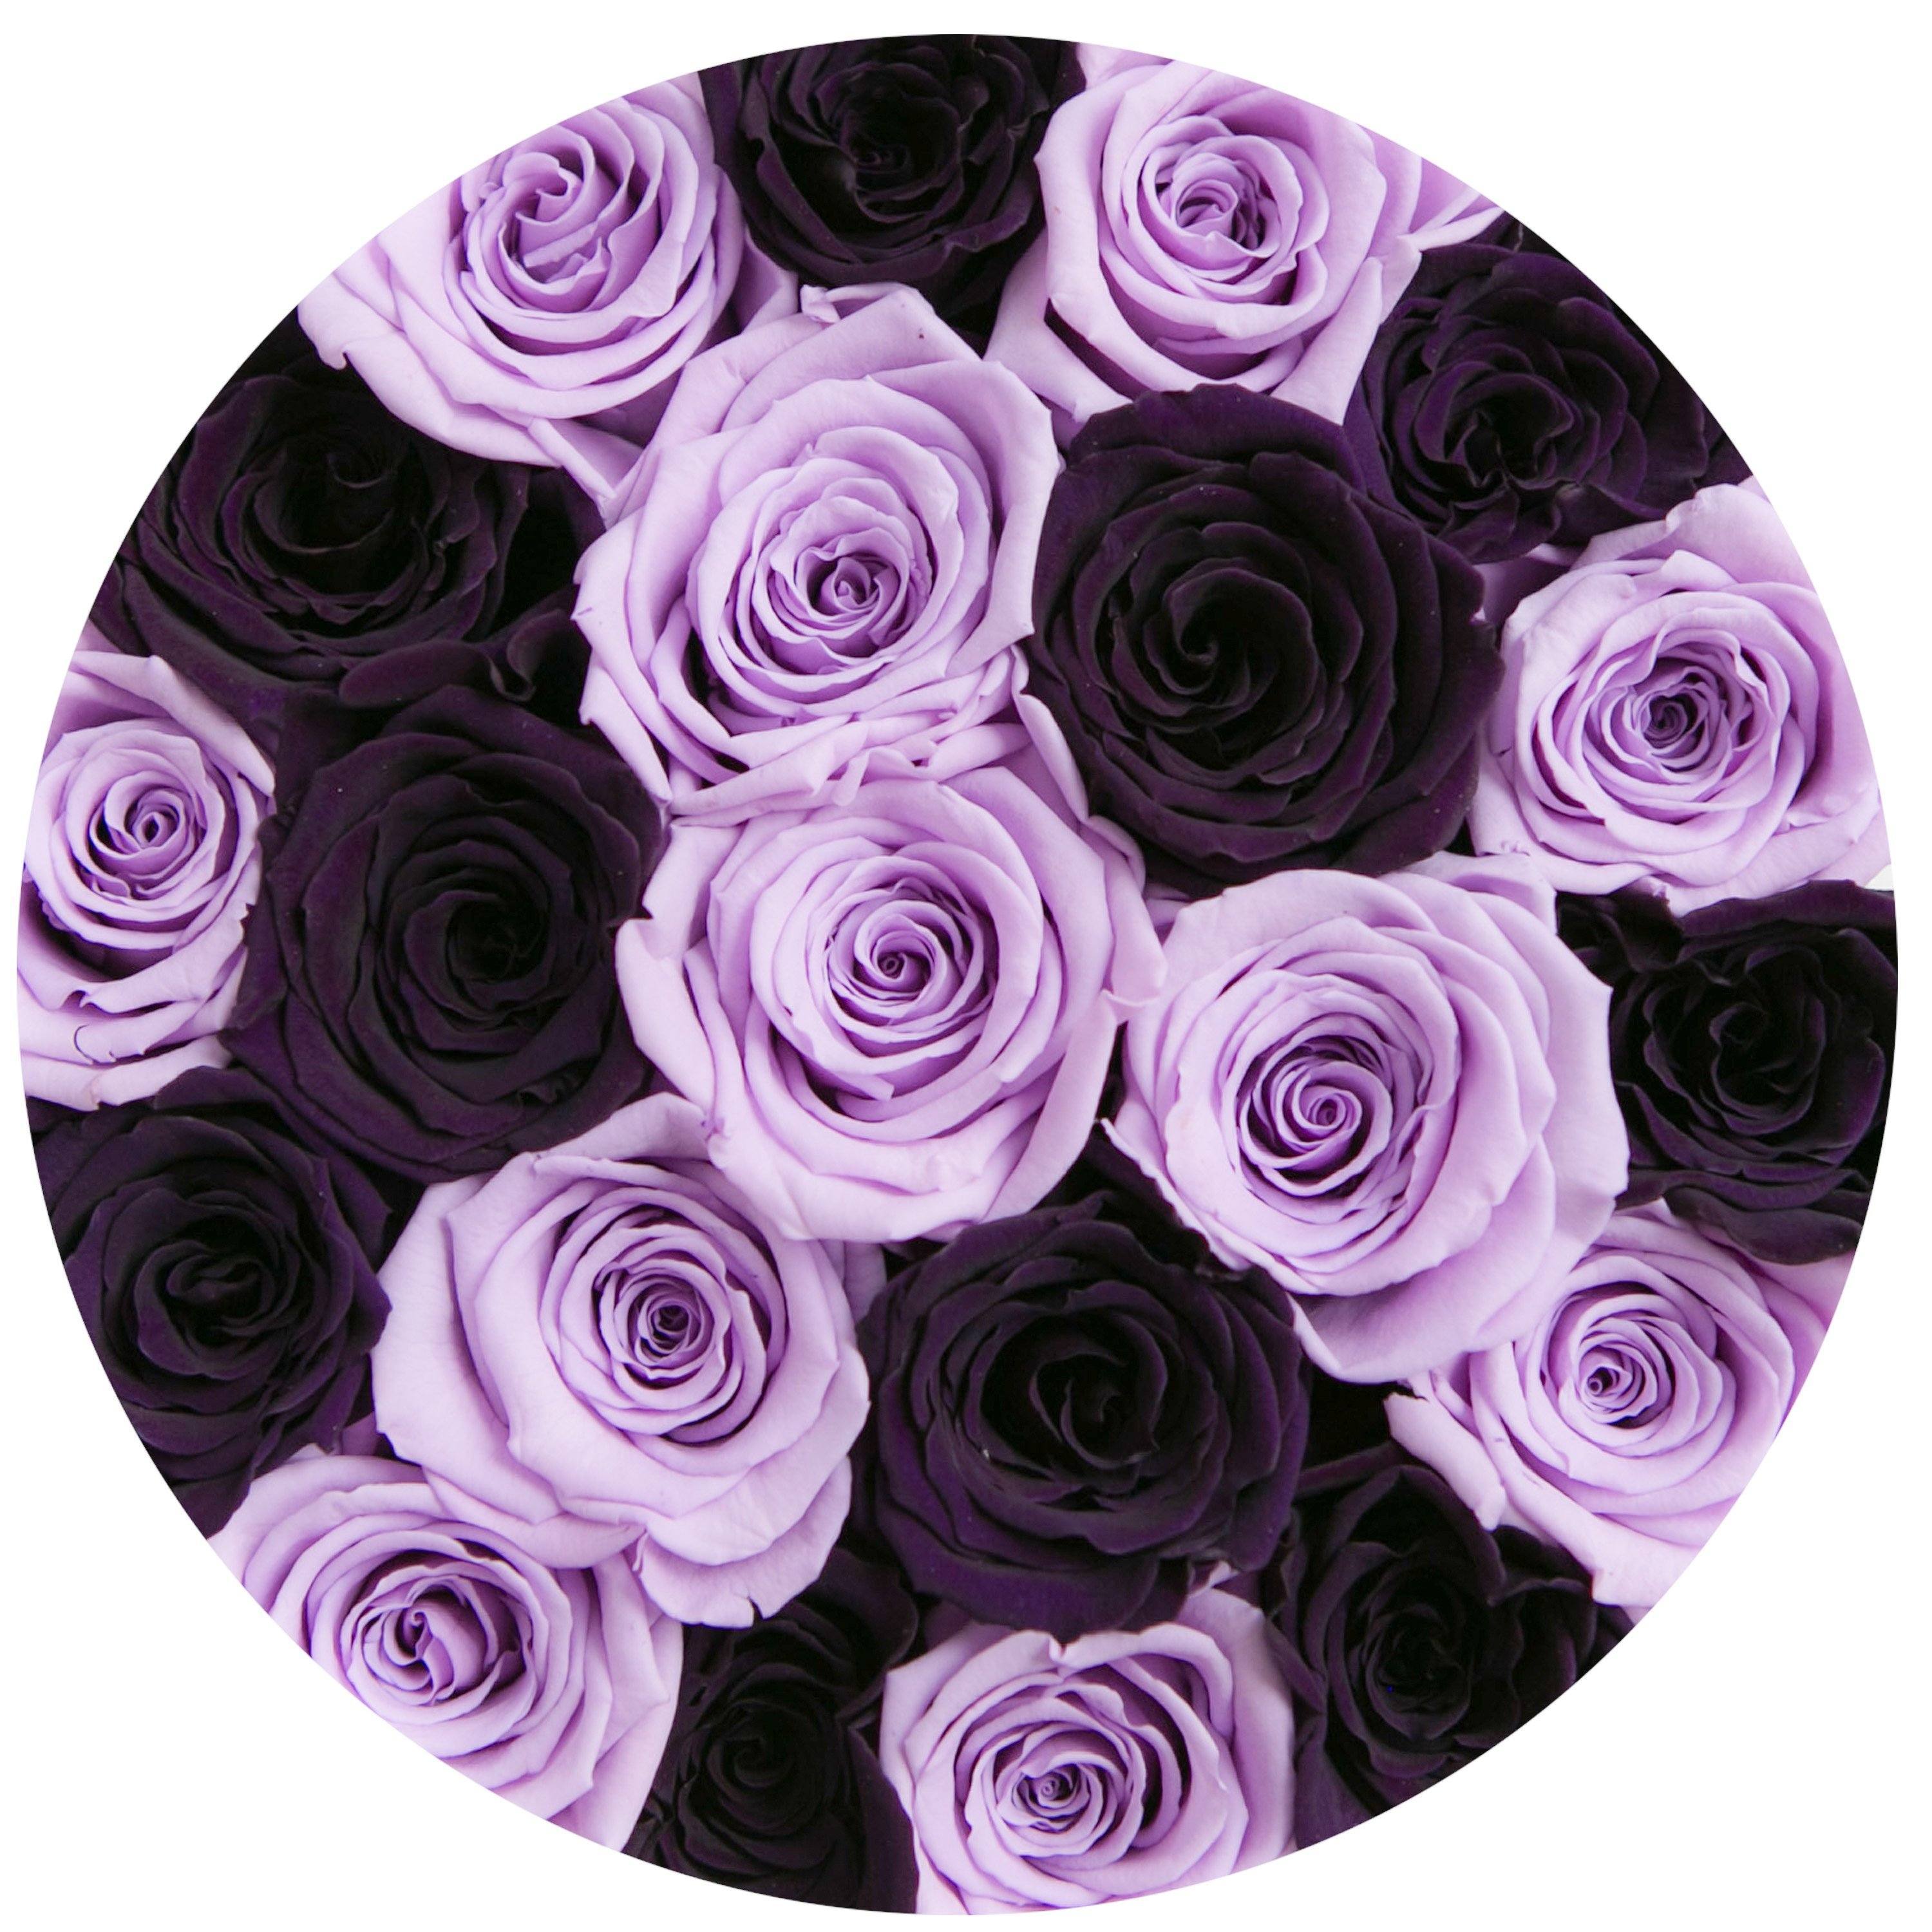 classic round box - white - lavender&dark-purple roses lavender eternity roses - the million roses